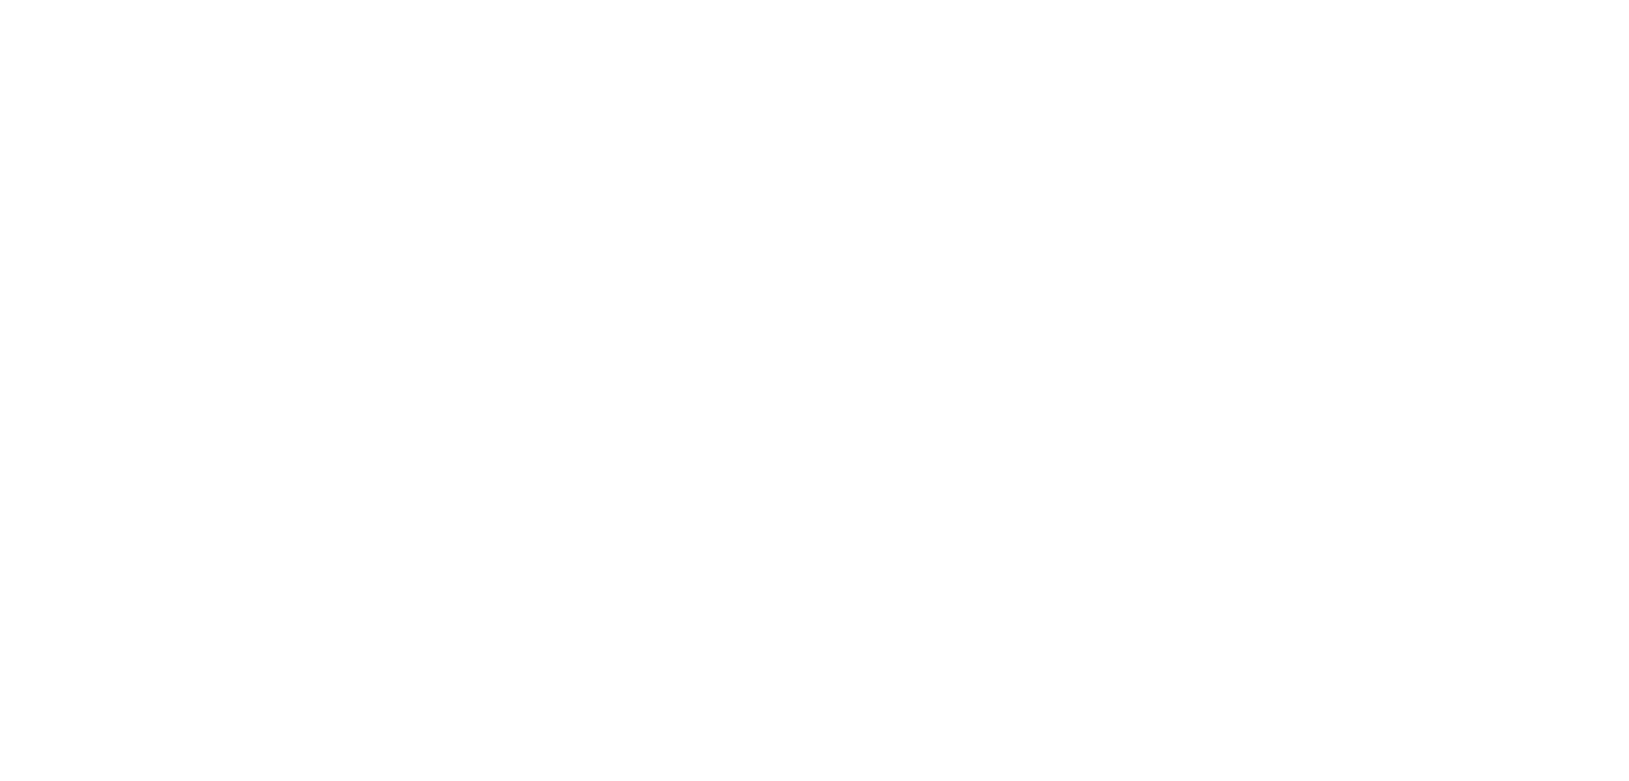 The Quarters logo in white